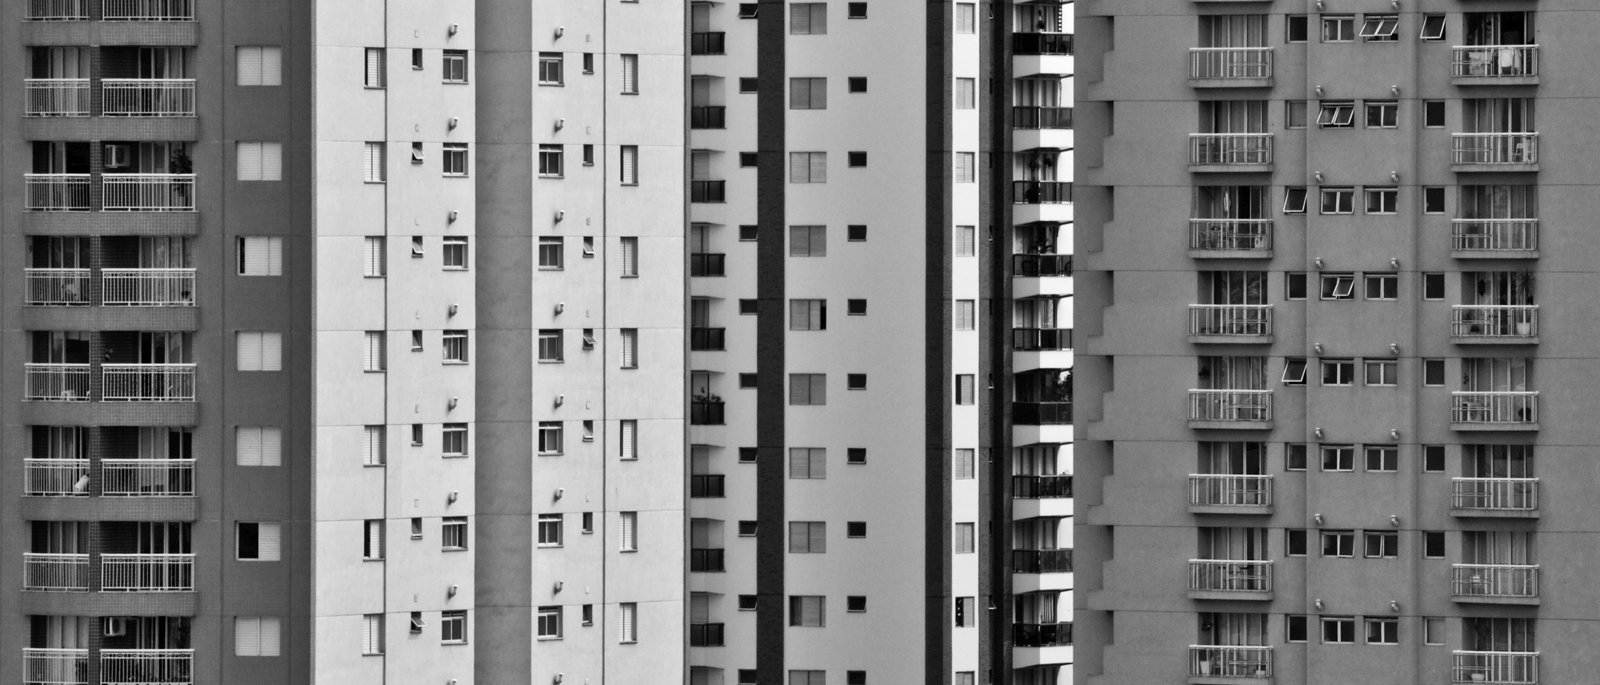 Tall apartment blocks in São Paulo